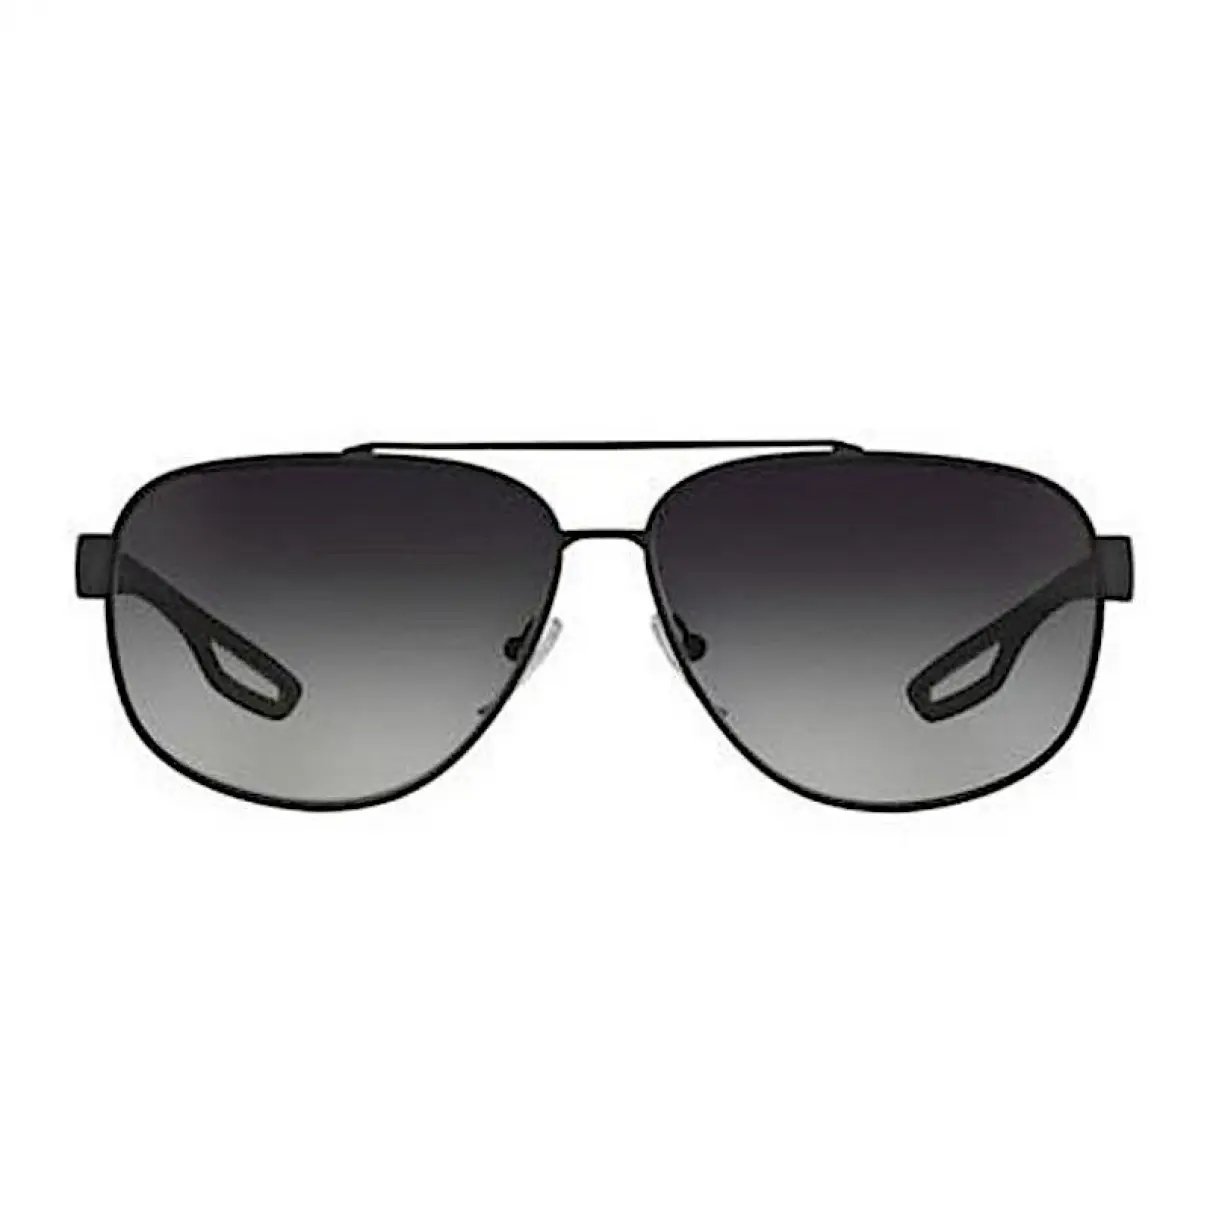 Buy Prada Sunglasses online